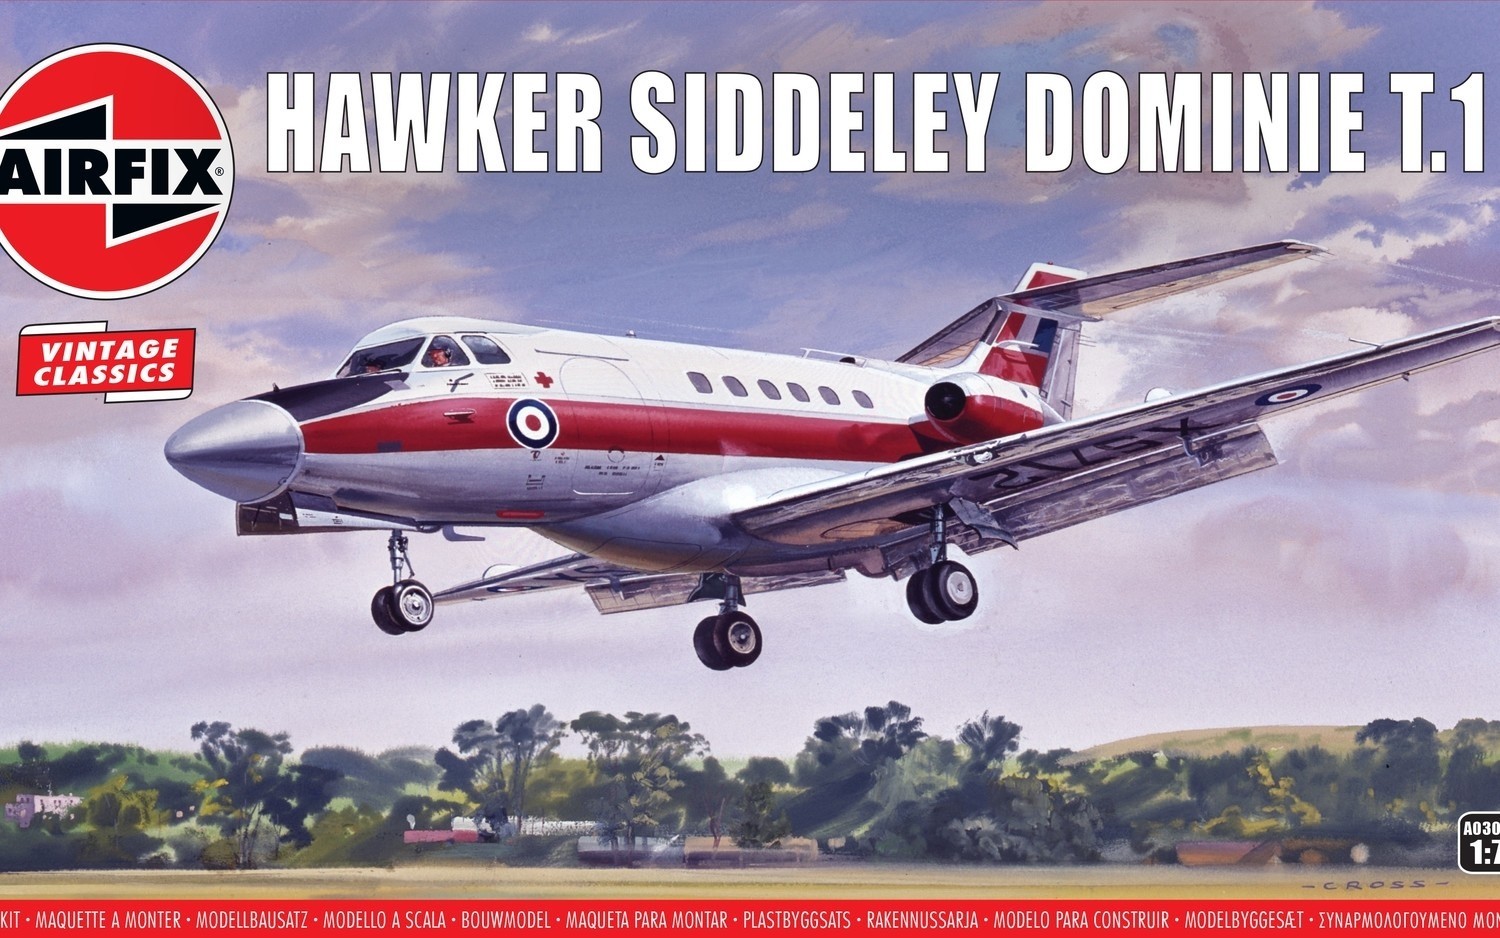 Hawker-Siddeley Dominie T.1 Vintage Classics series